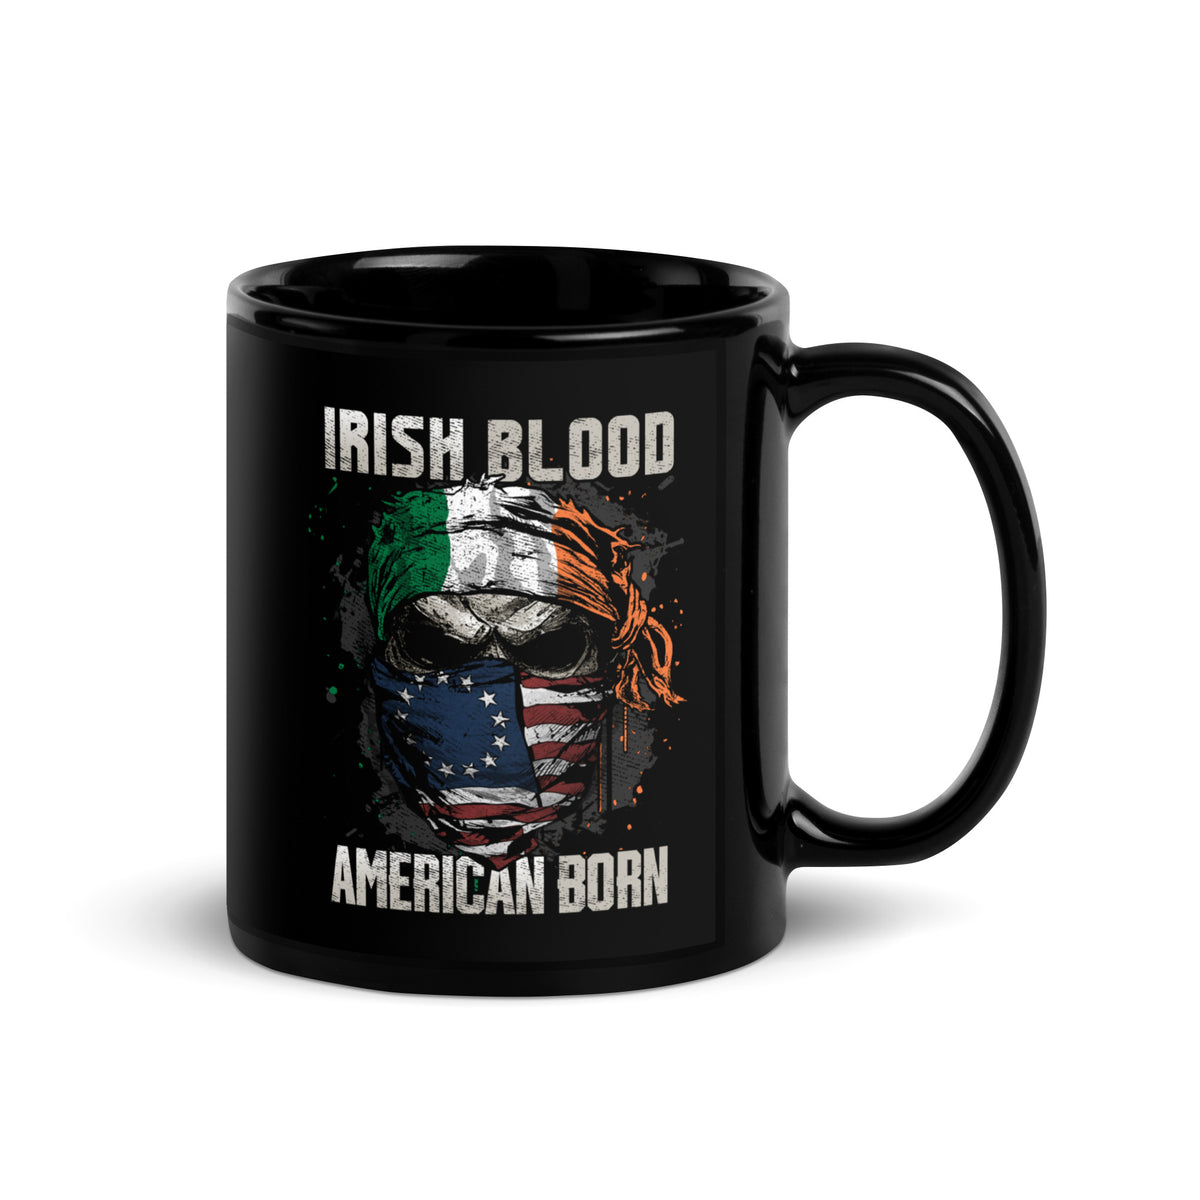 America with our Irish Blood. American Born Mug